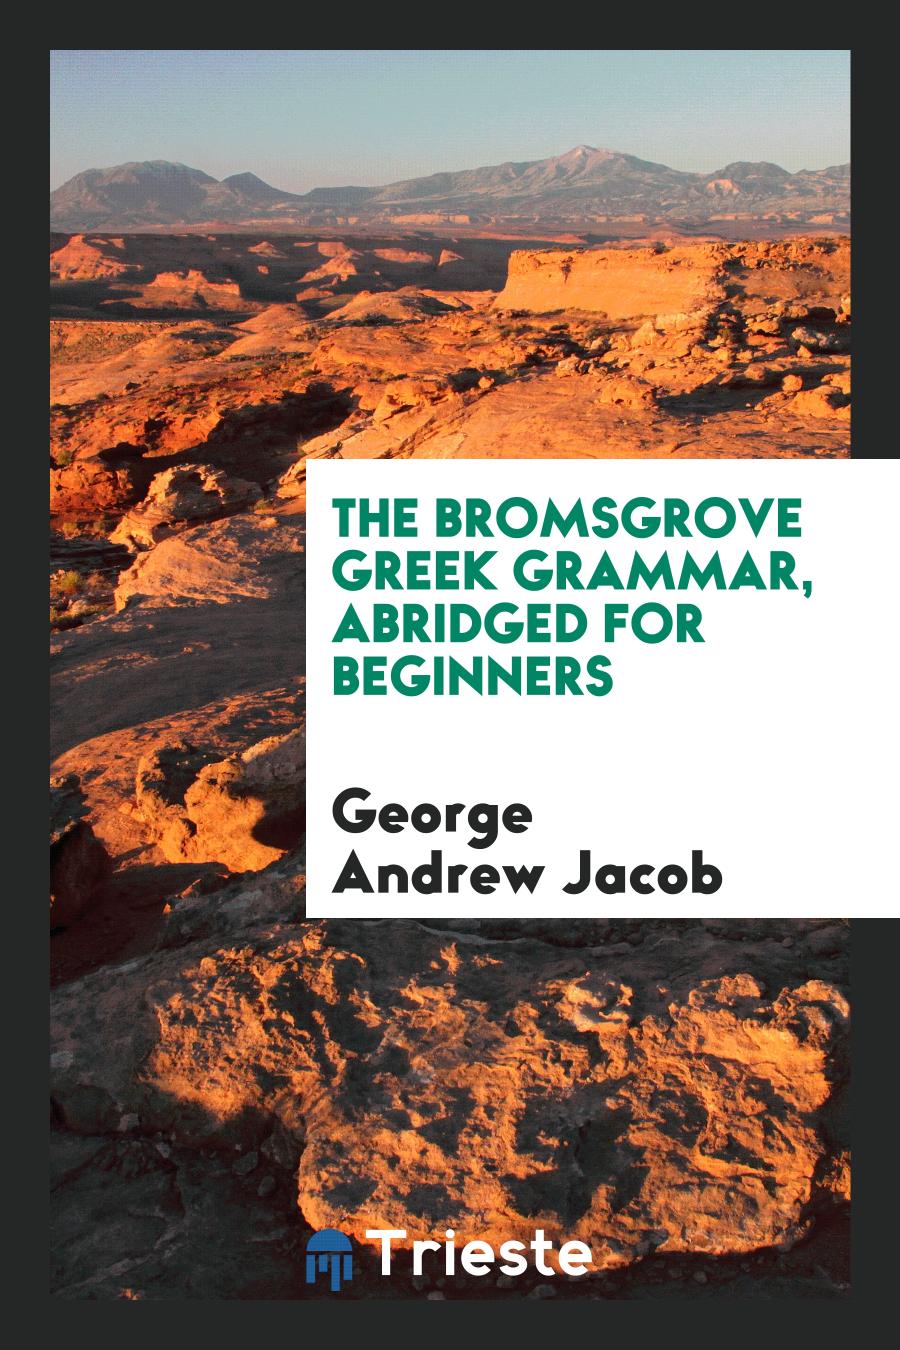 The Bromsgrove Greek grammar, abridged for beginners